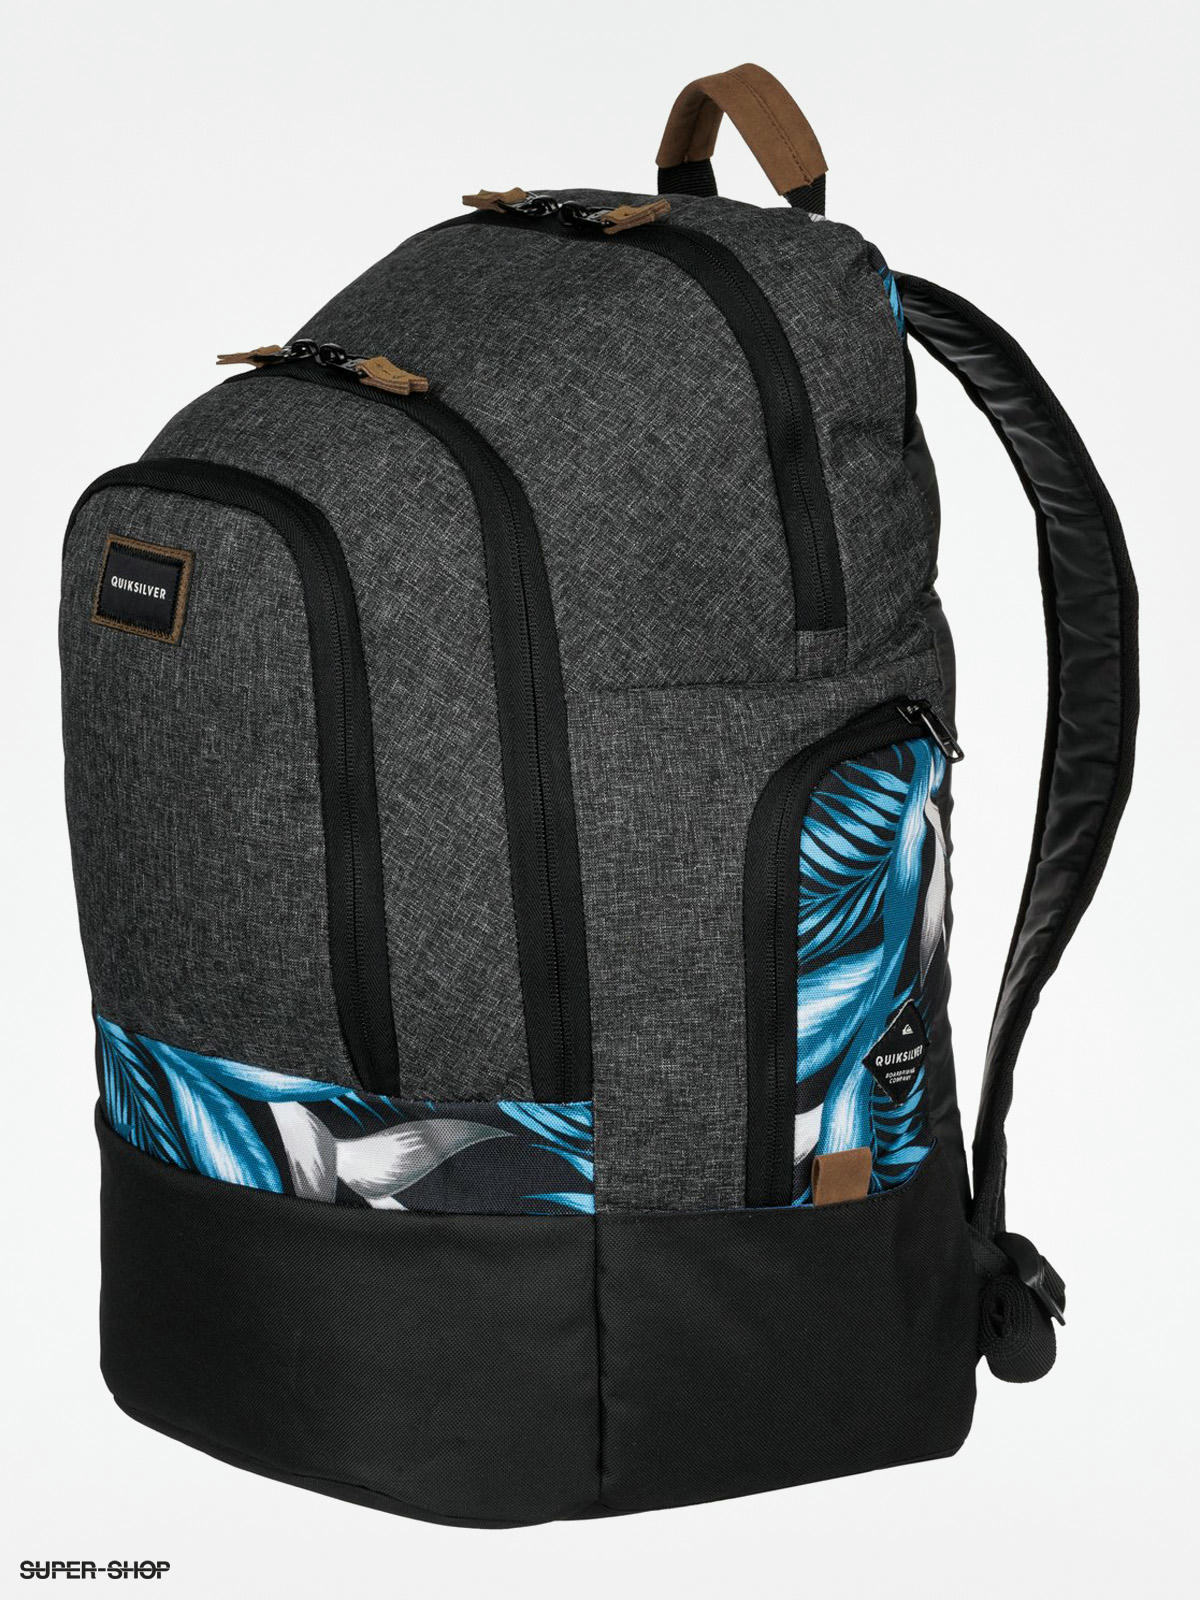 Kavu Backpack Rope Bag (chevron shore)